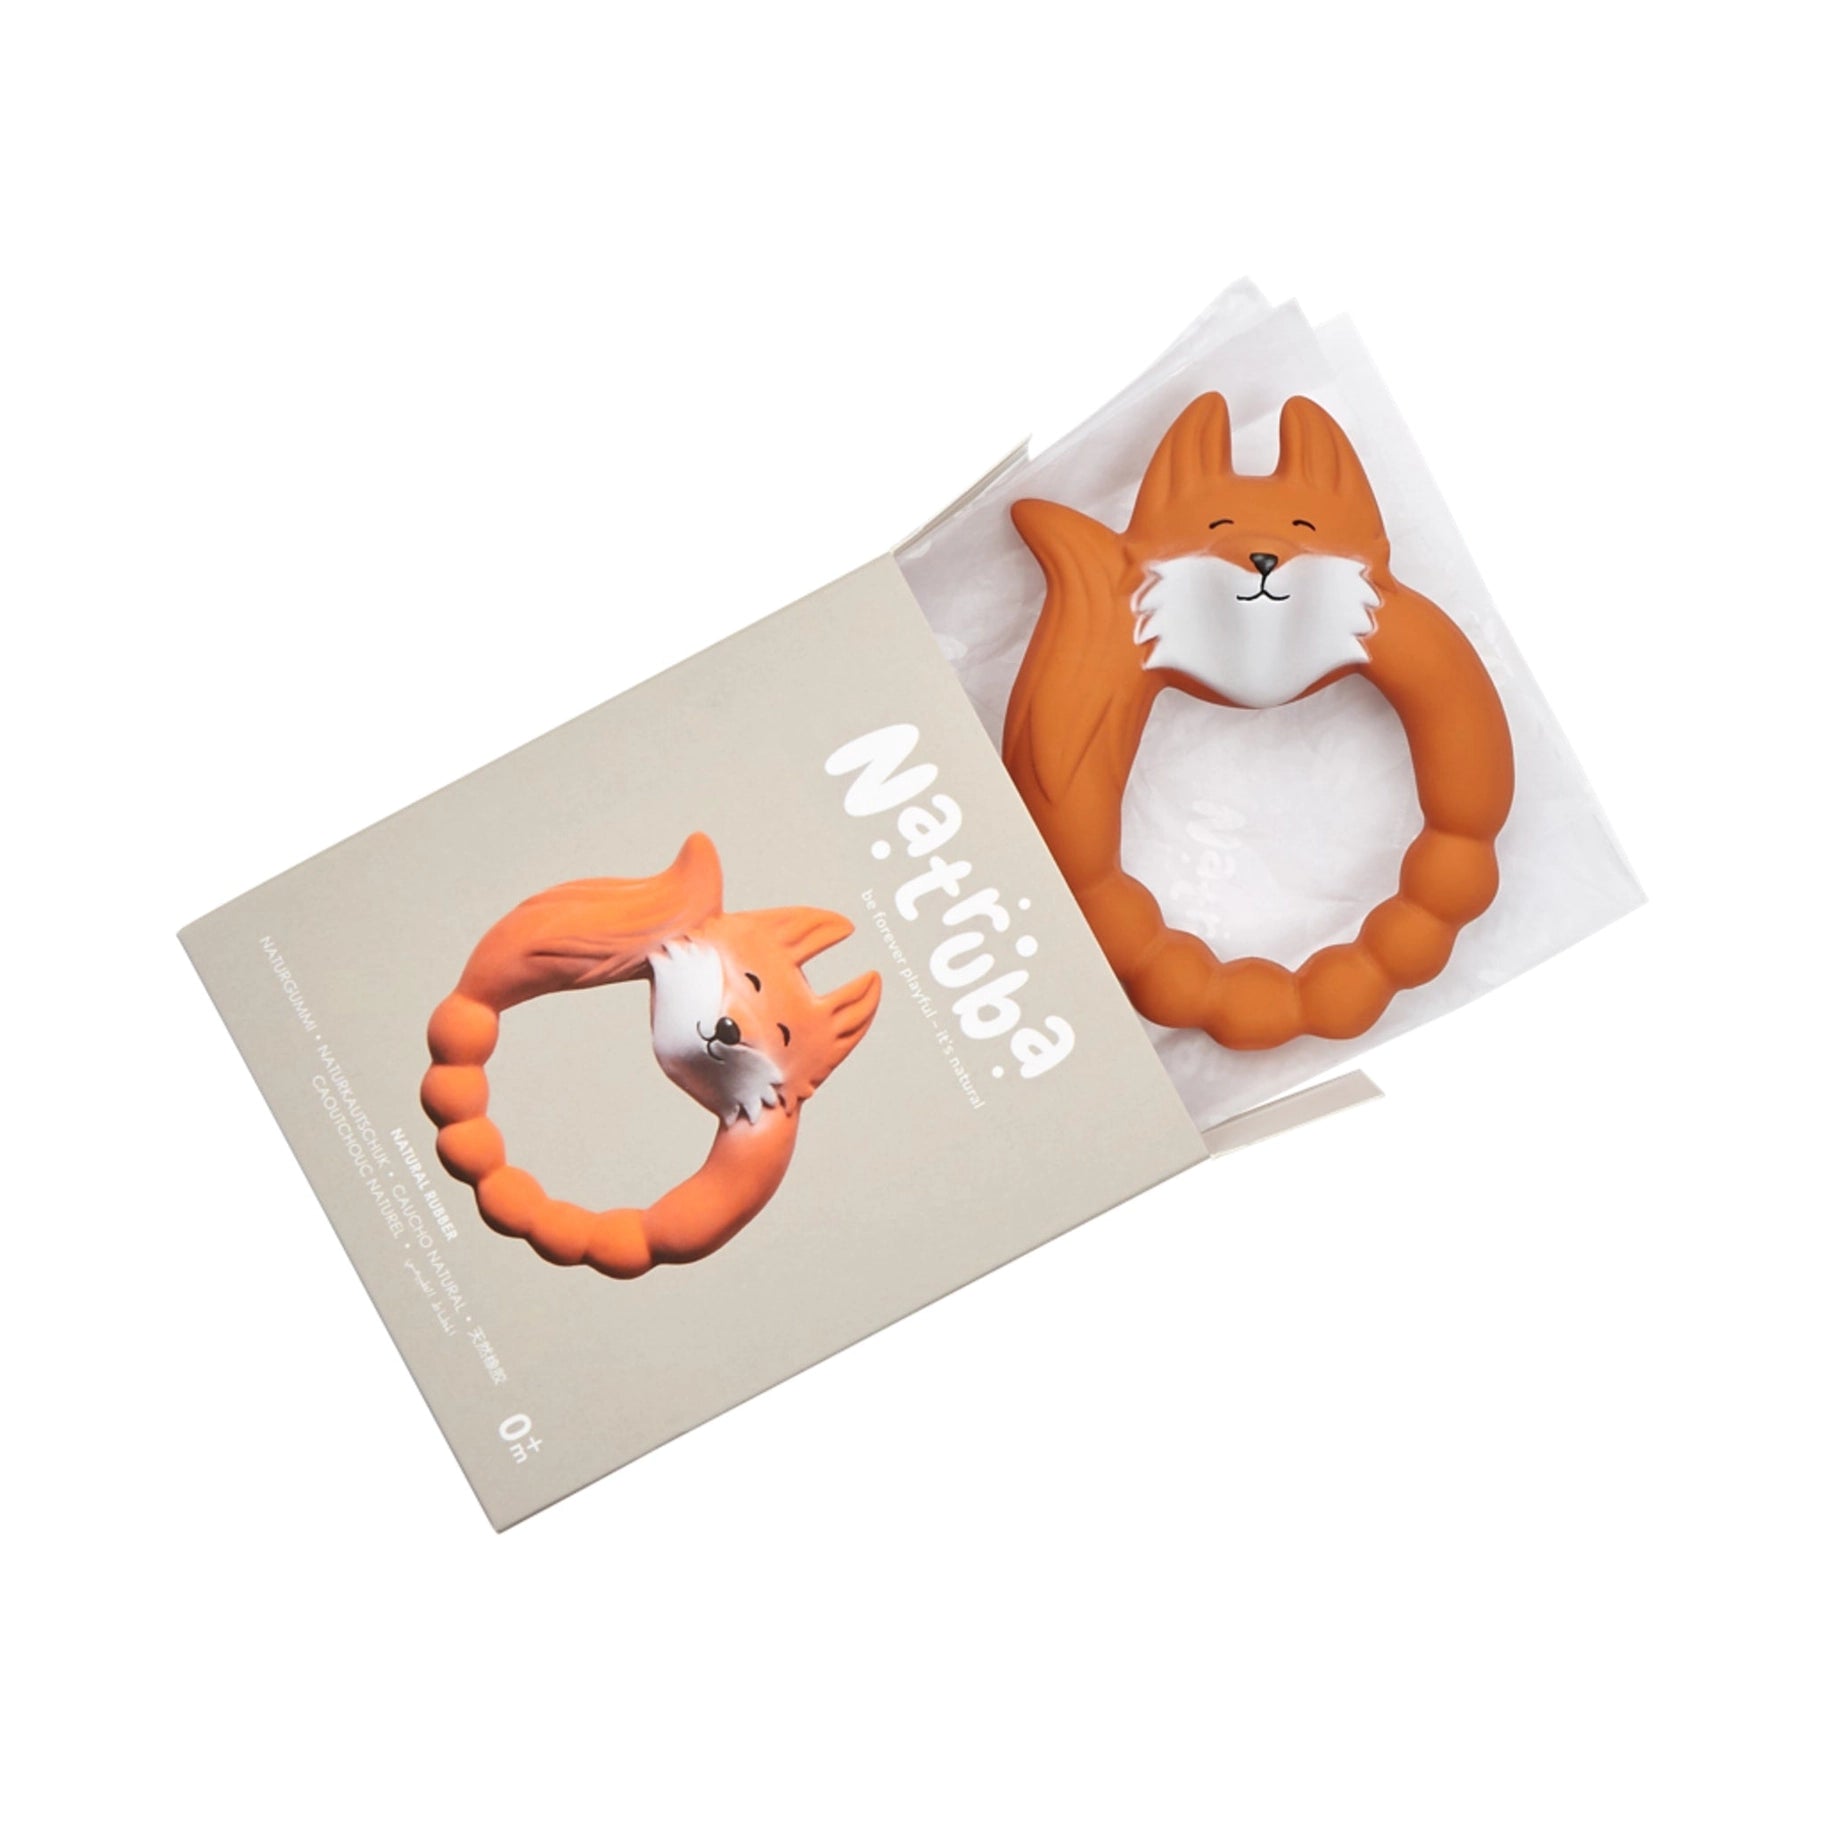 Natruba Fox Teether, Orange, -- ANB Baby